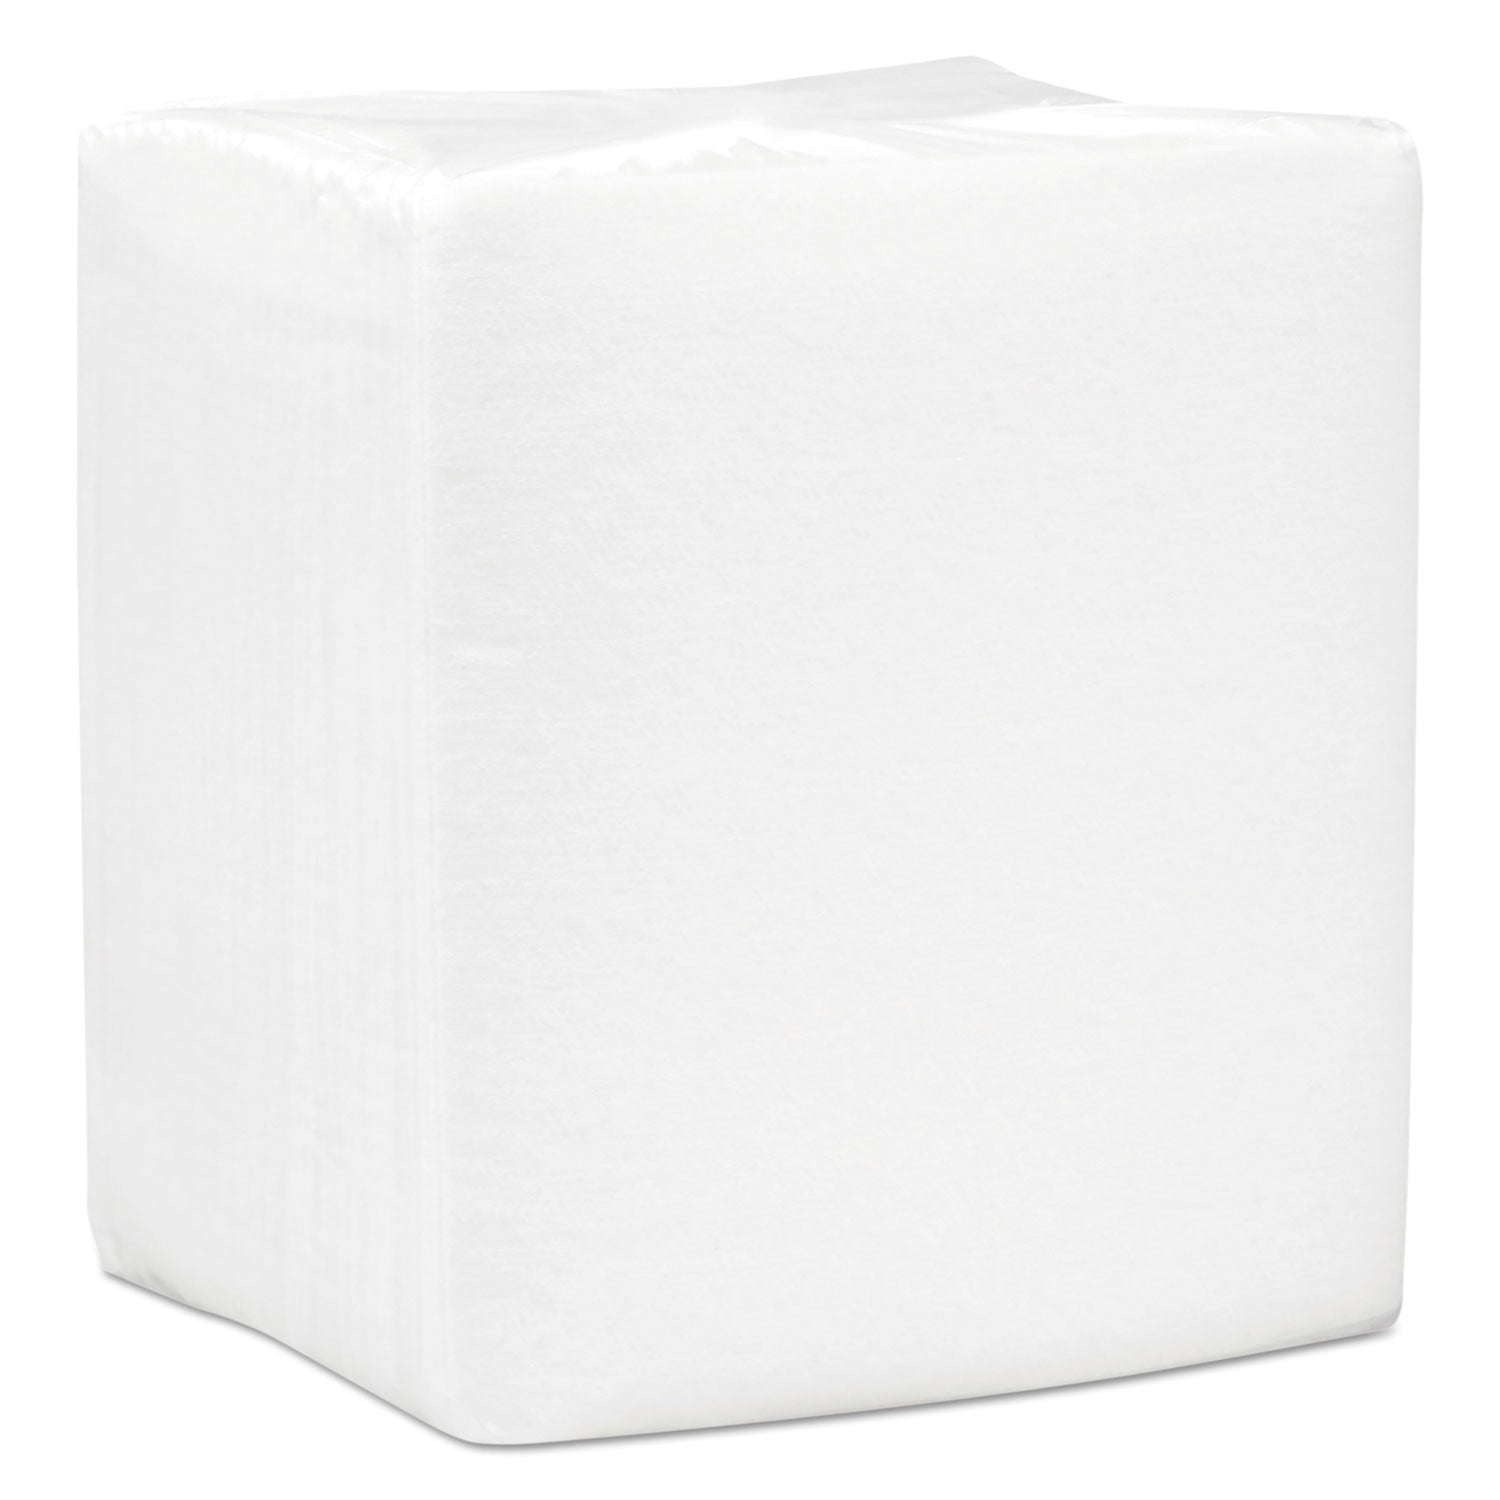 scottpure-wipers-1-4-fold-12-x-15-white-100-box-4-carton_kcc06121 - 2